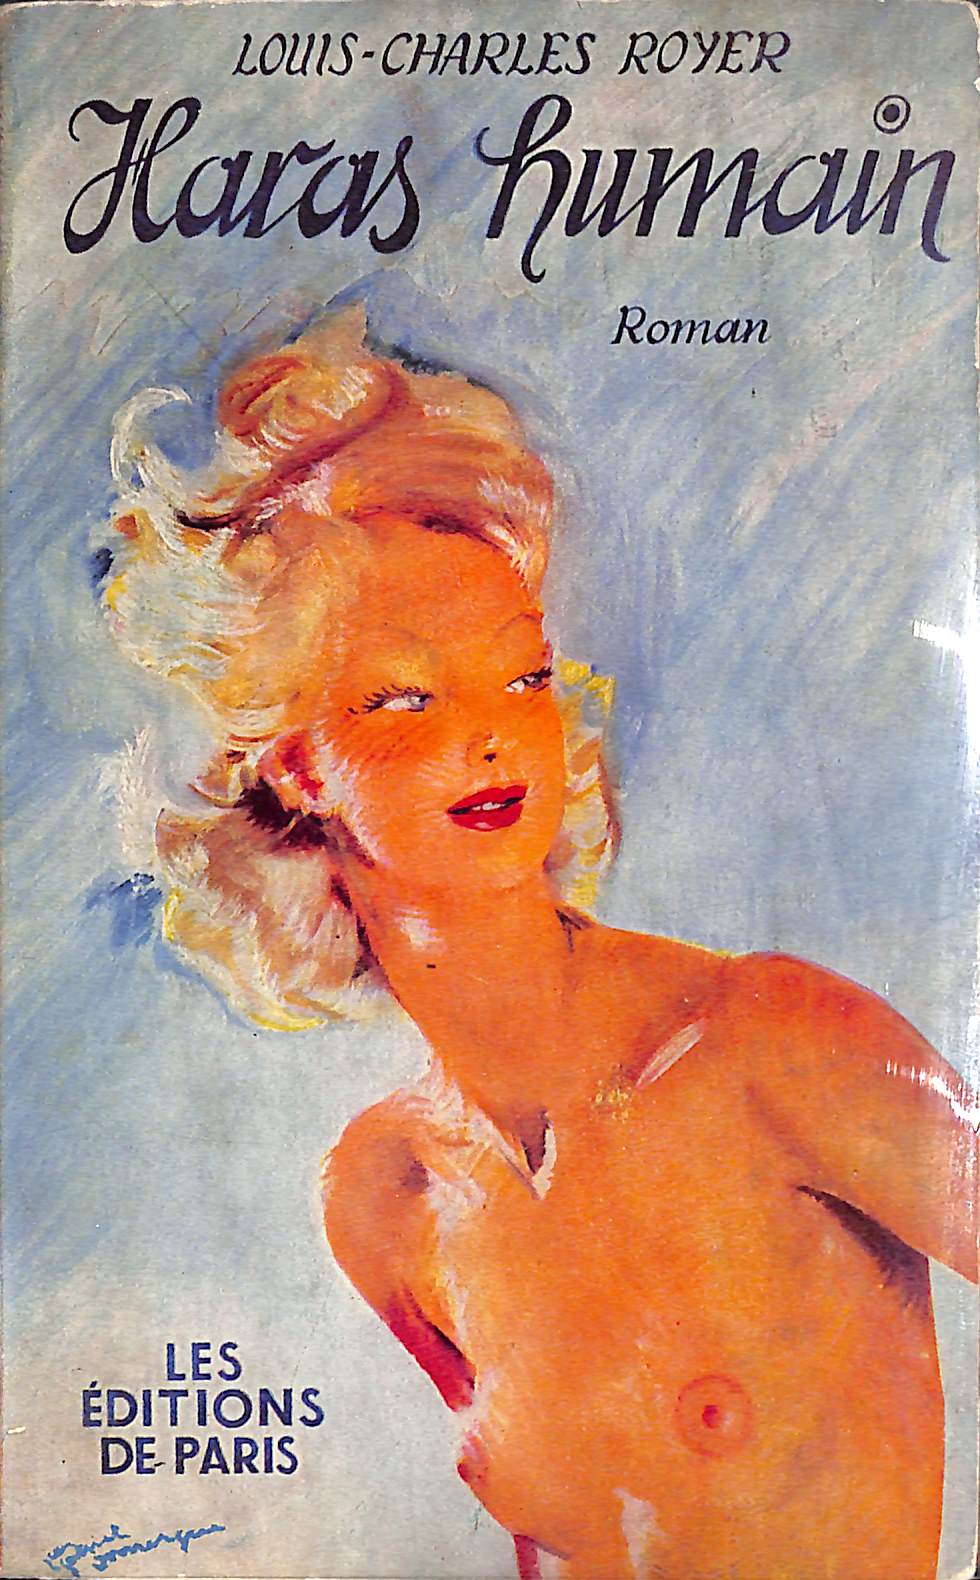 "Haras Humain" 1949 ROYER, Louis-Charles